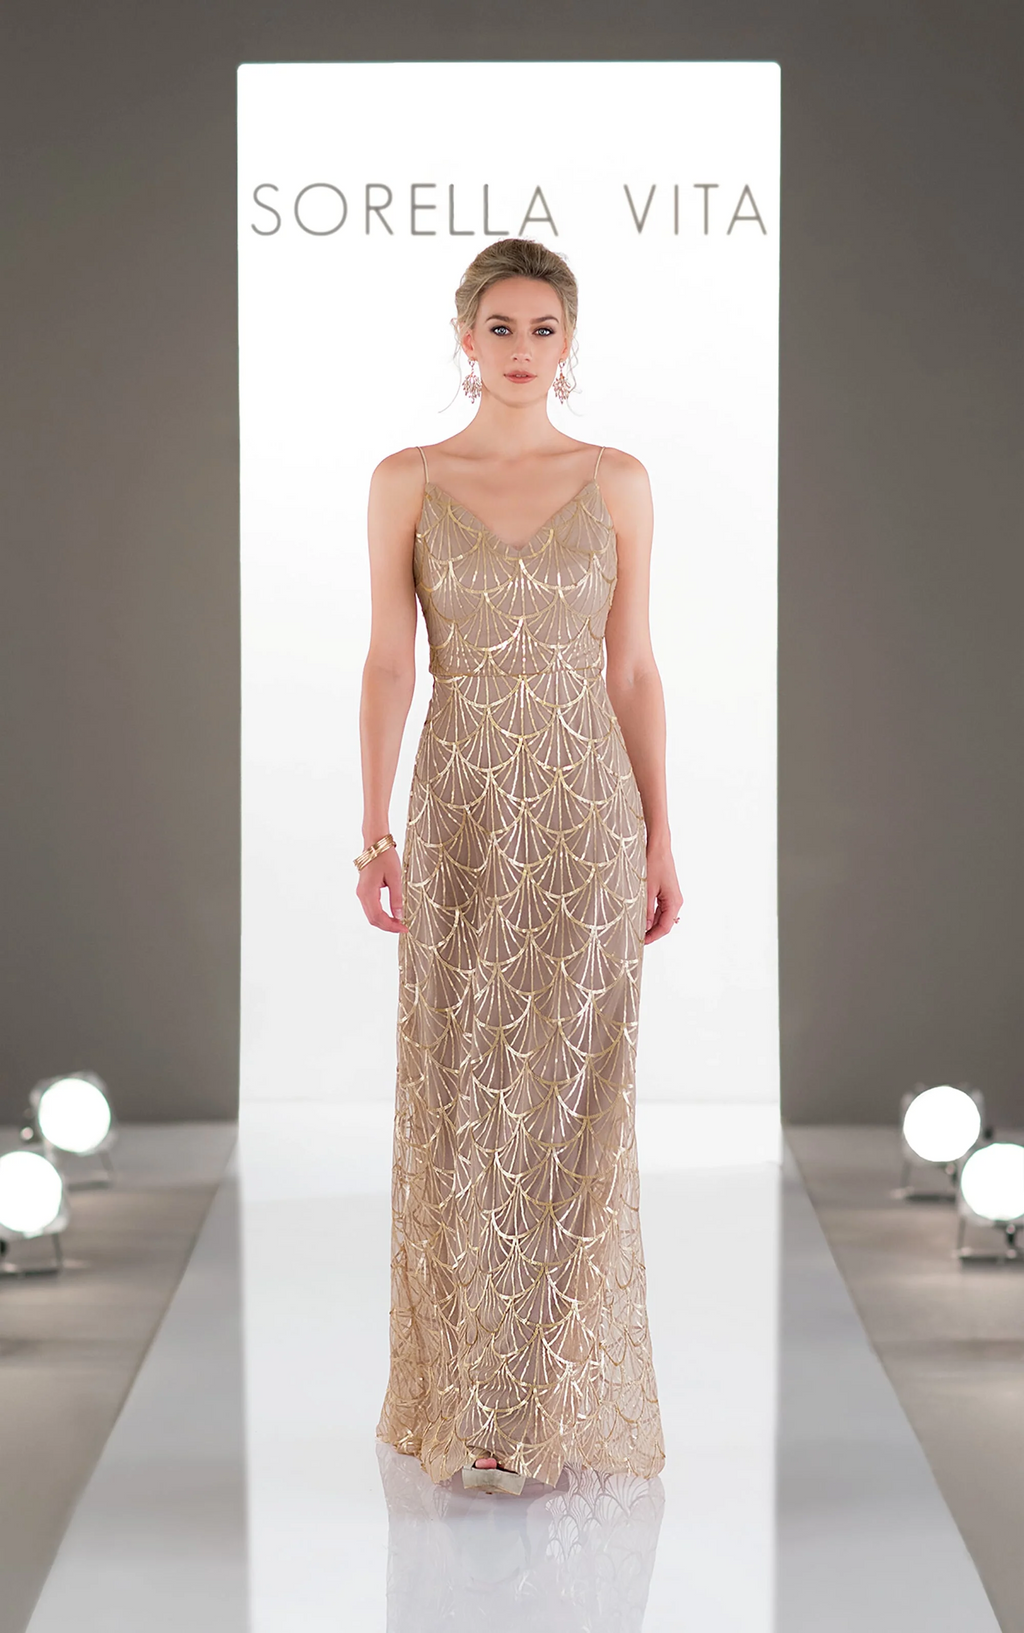 Sorella Vita Dress Style 9086 (Gold-Size 12) Prom, Ball., Black-tie, Bridesmaid, Pageant